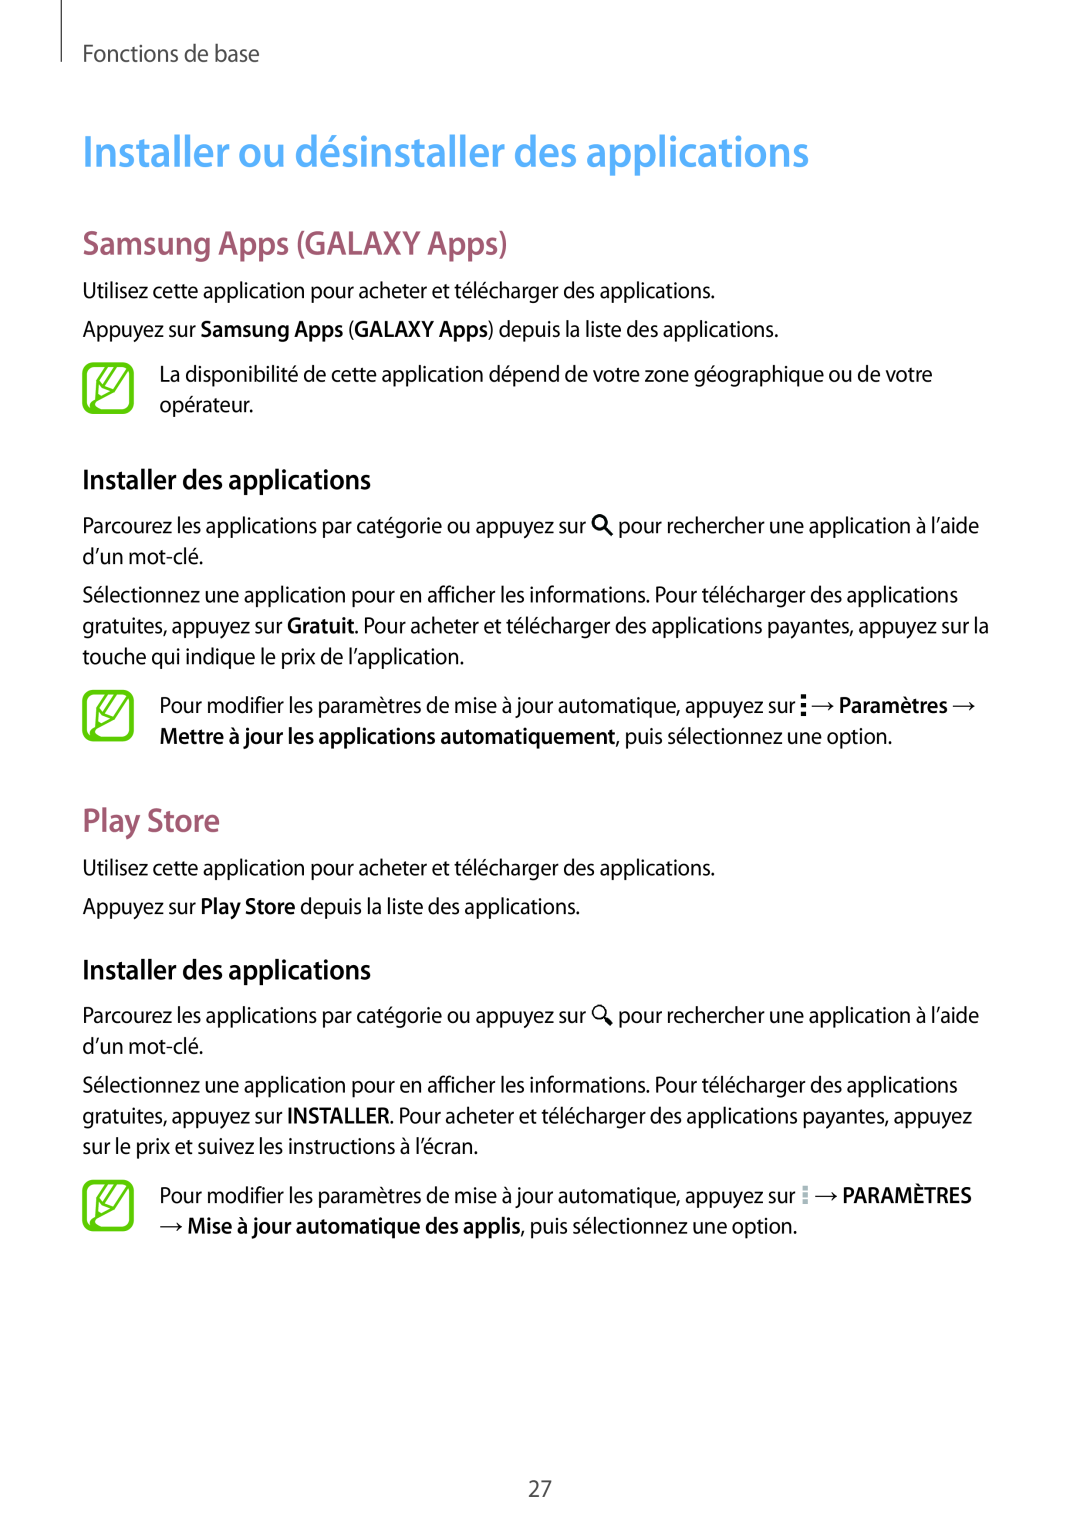 Samsung SM-G130HZAACOR Installer ou désinstaller des applications, Samsung Apps GALAXY Apps, Play Store, Fonctions de base 